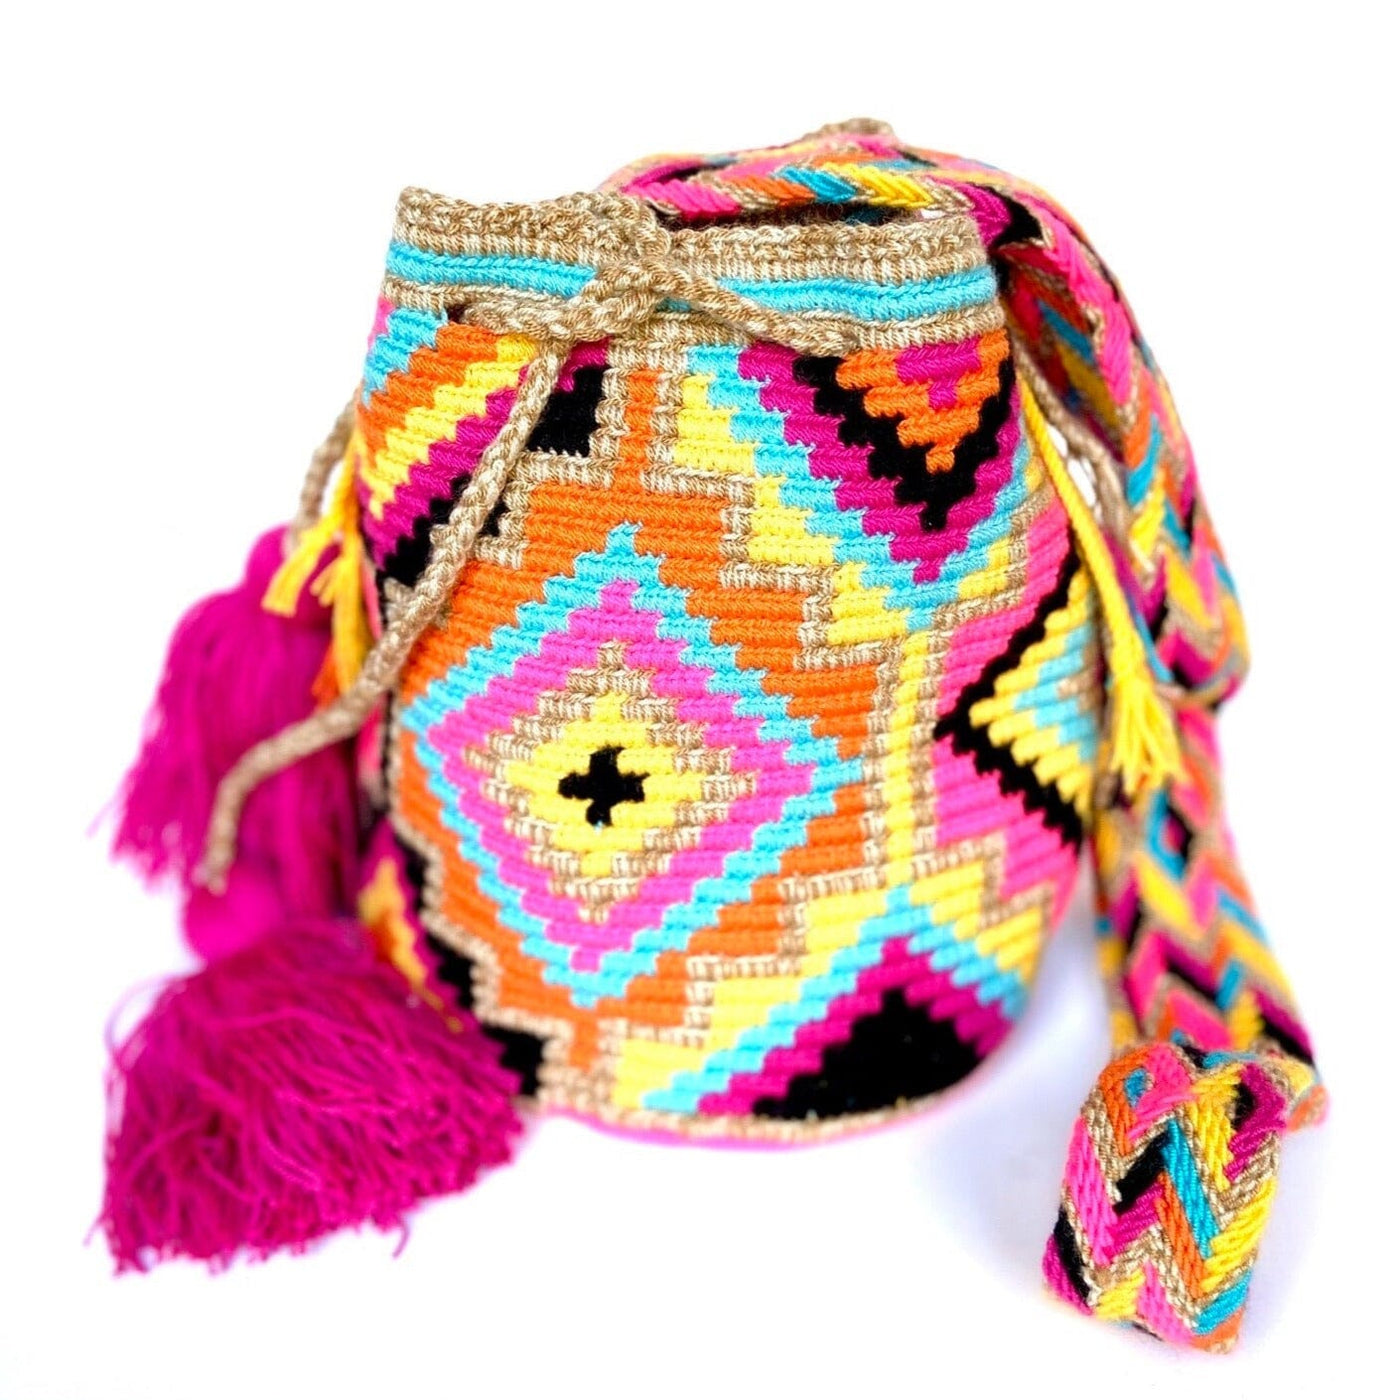 Neon Boho Beach Bag | Crossbody Spring/summer crochet bag | Colorful 4U